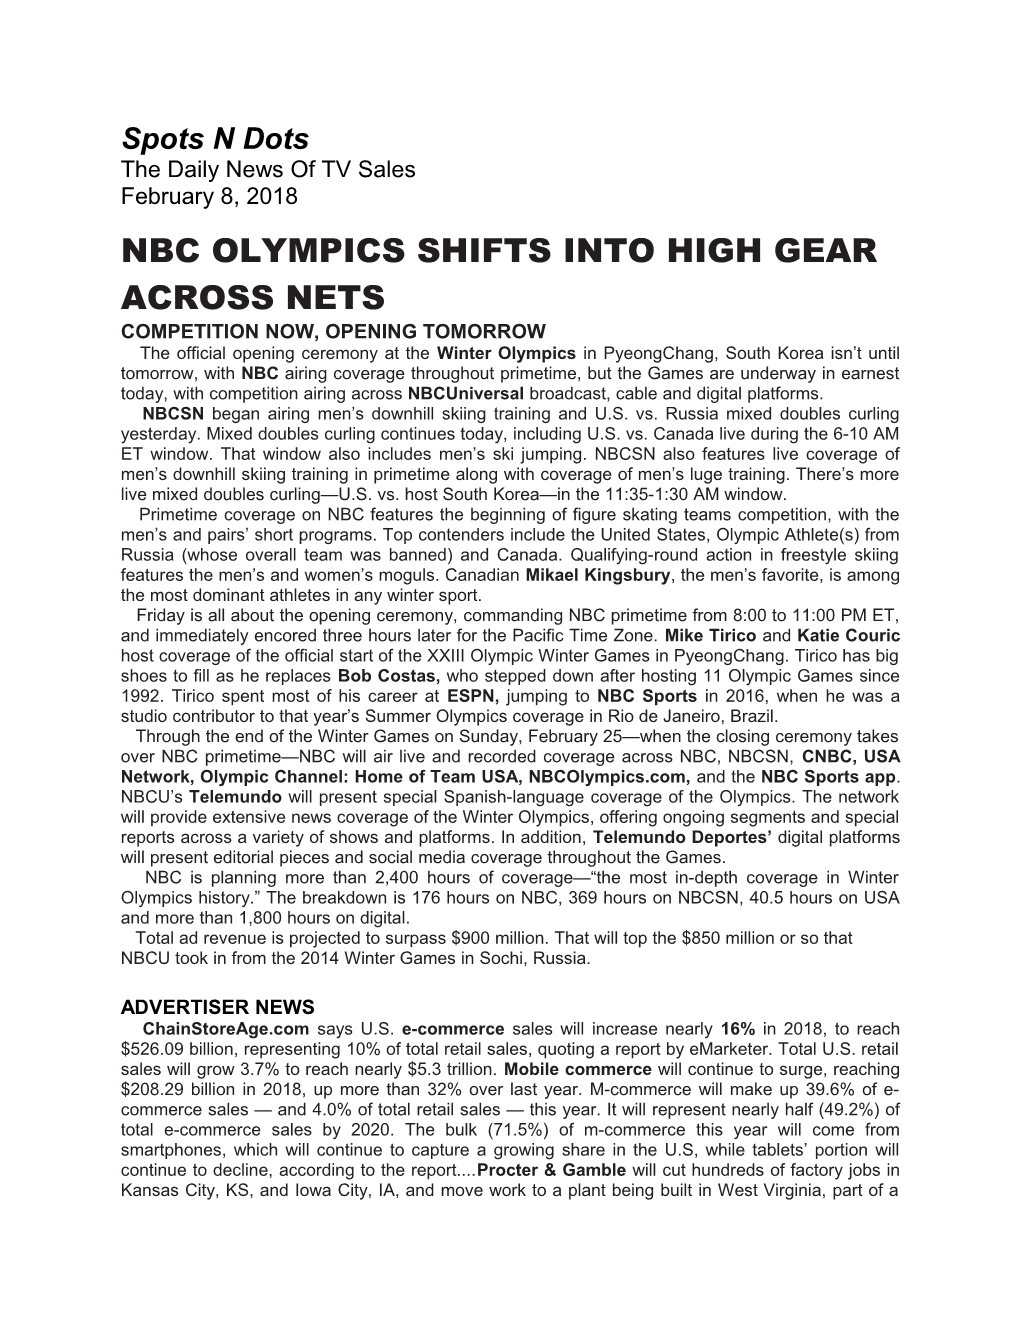 Nbc Olympics Shifts Into High Gear Across Nets